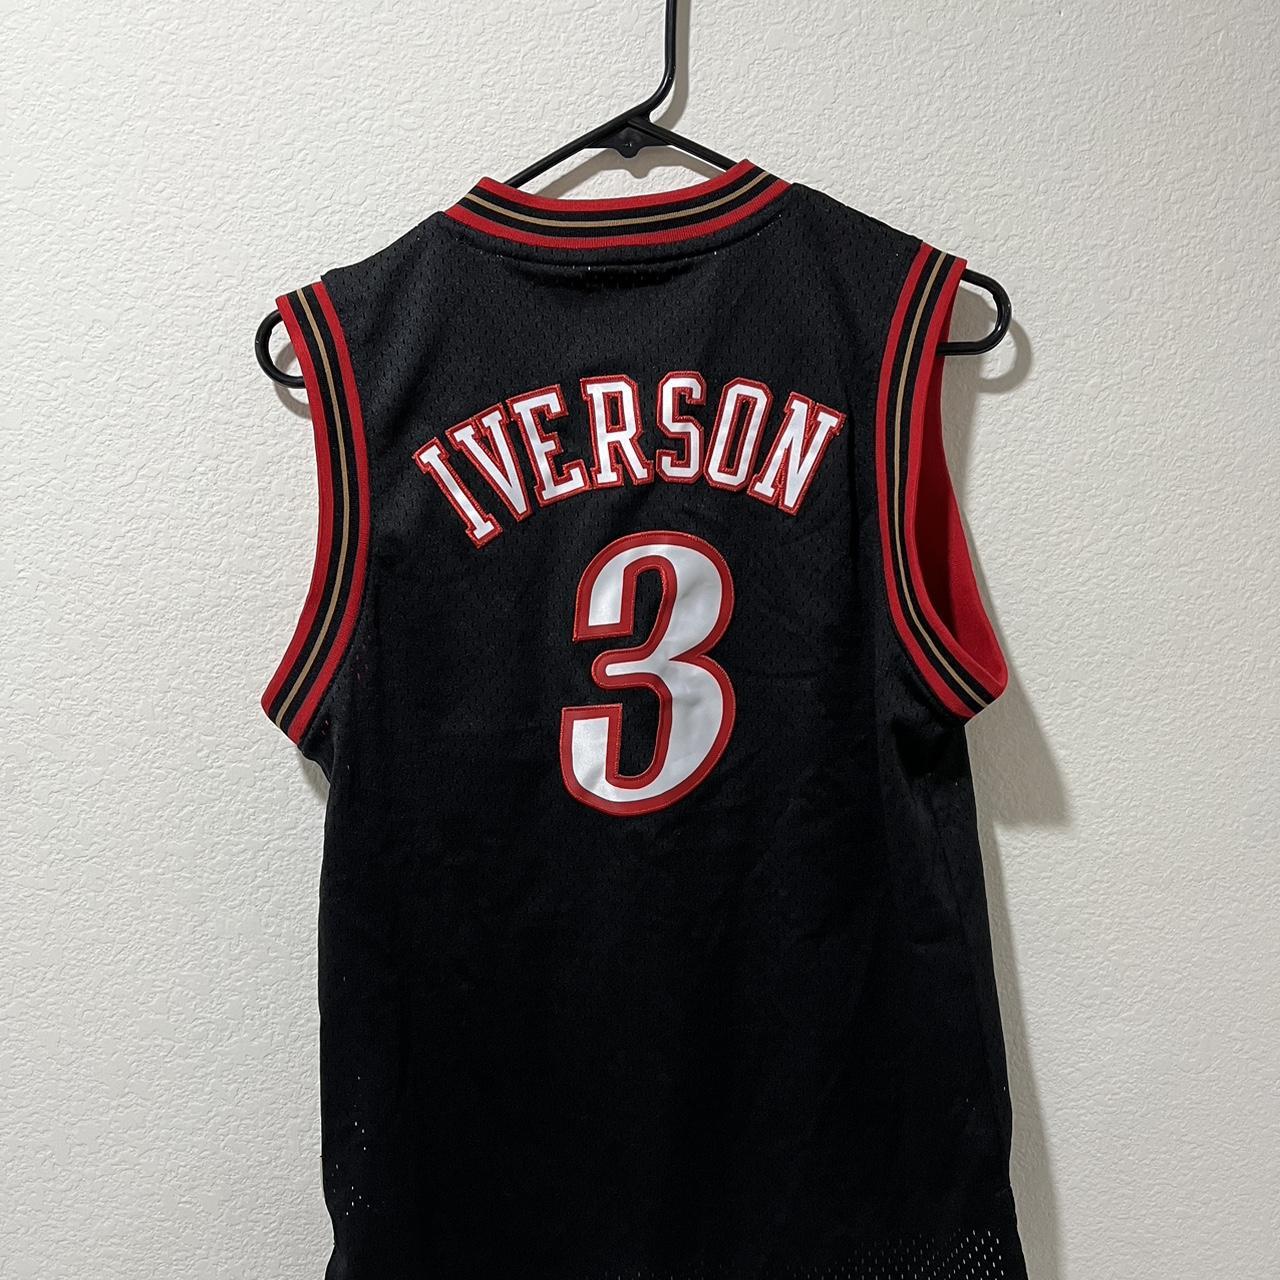 NBA Men's Black and Red Vest (2)